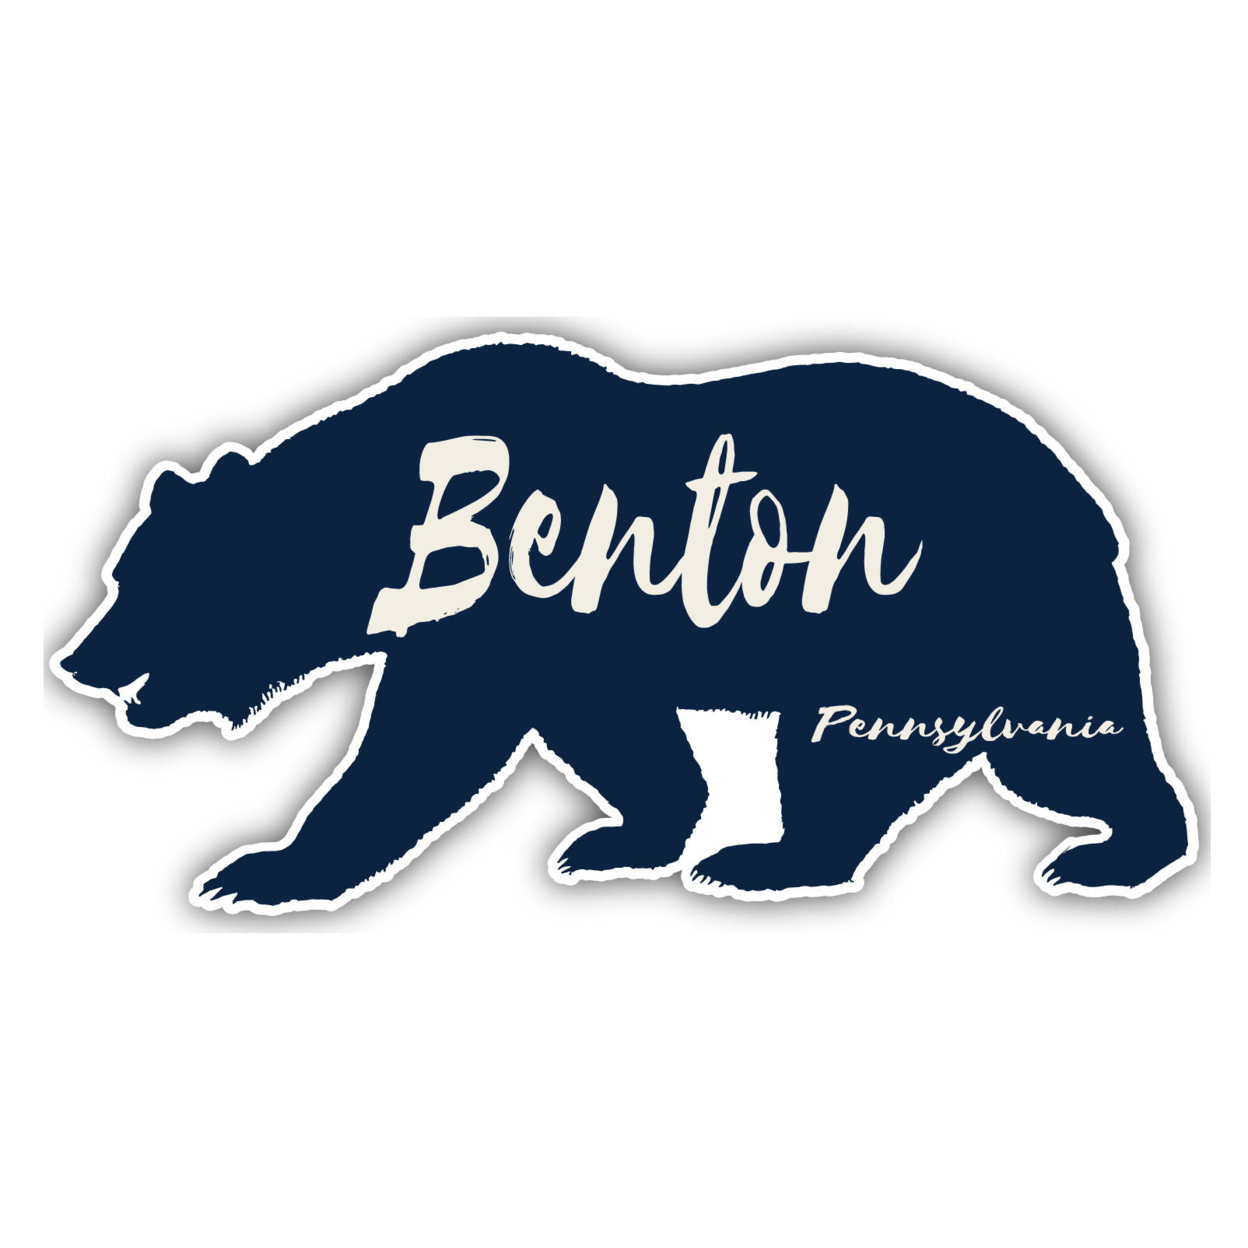 Benton Pennsylvania Souvenir Decorative Stickers (Choose Theme And Size) - Single Unit, 6-Inch, Bear